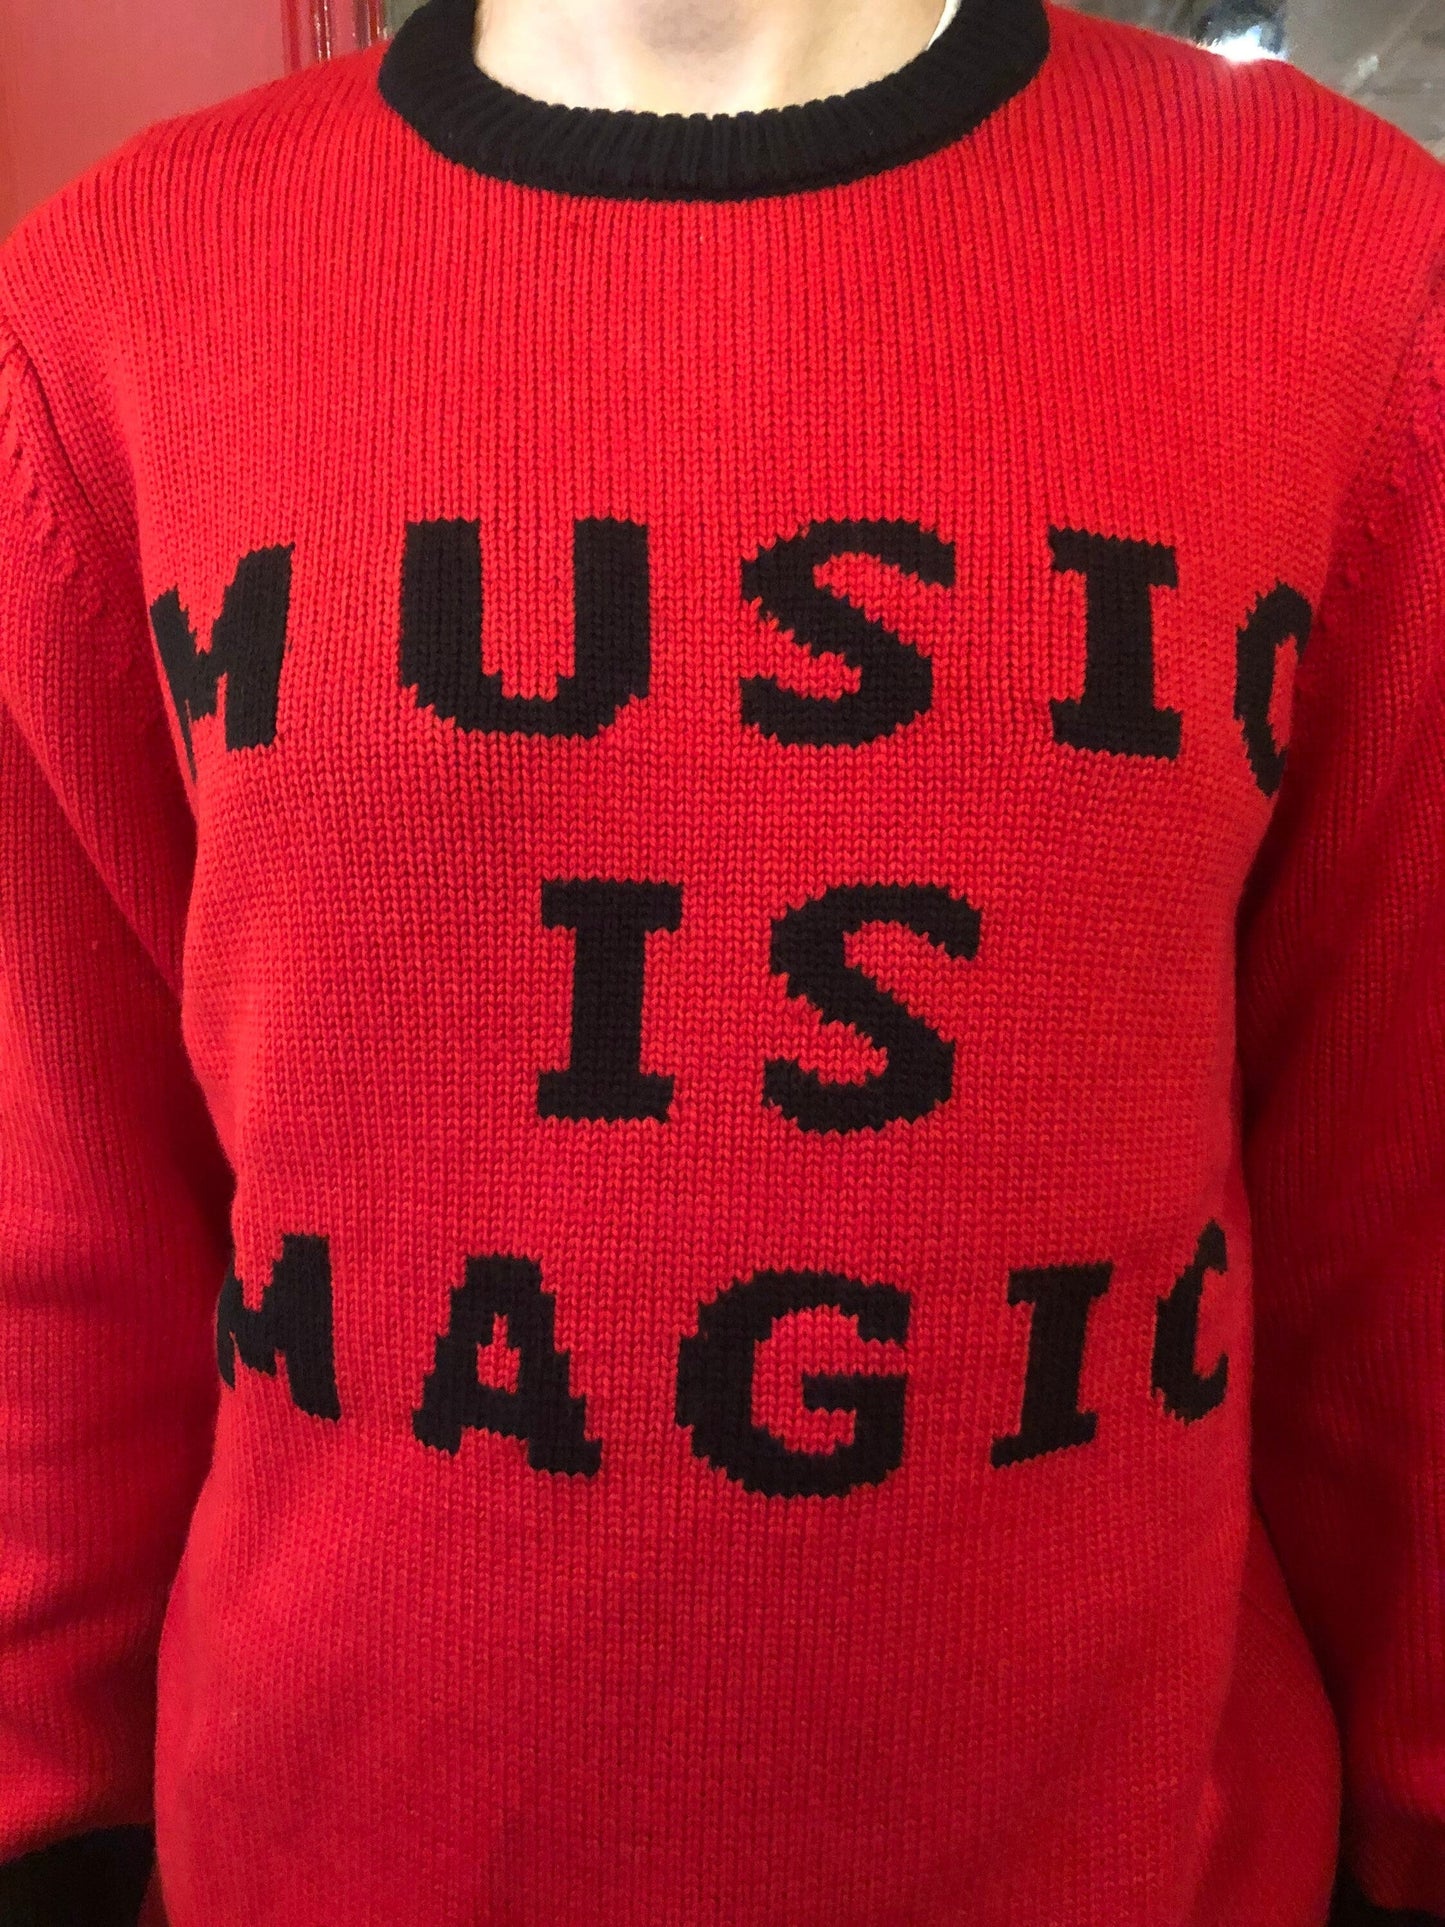 MUSIC IS MAGIC Handmade pull over Sweater 100% merino wool design by Magic Hill